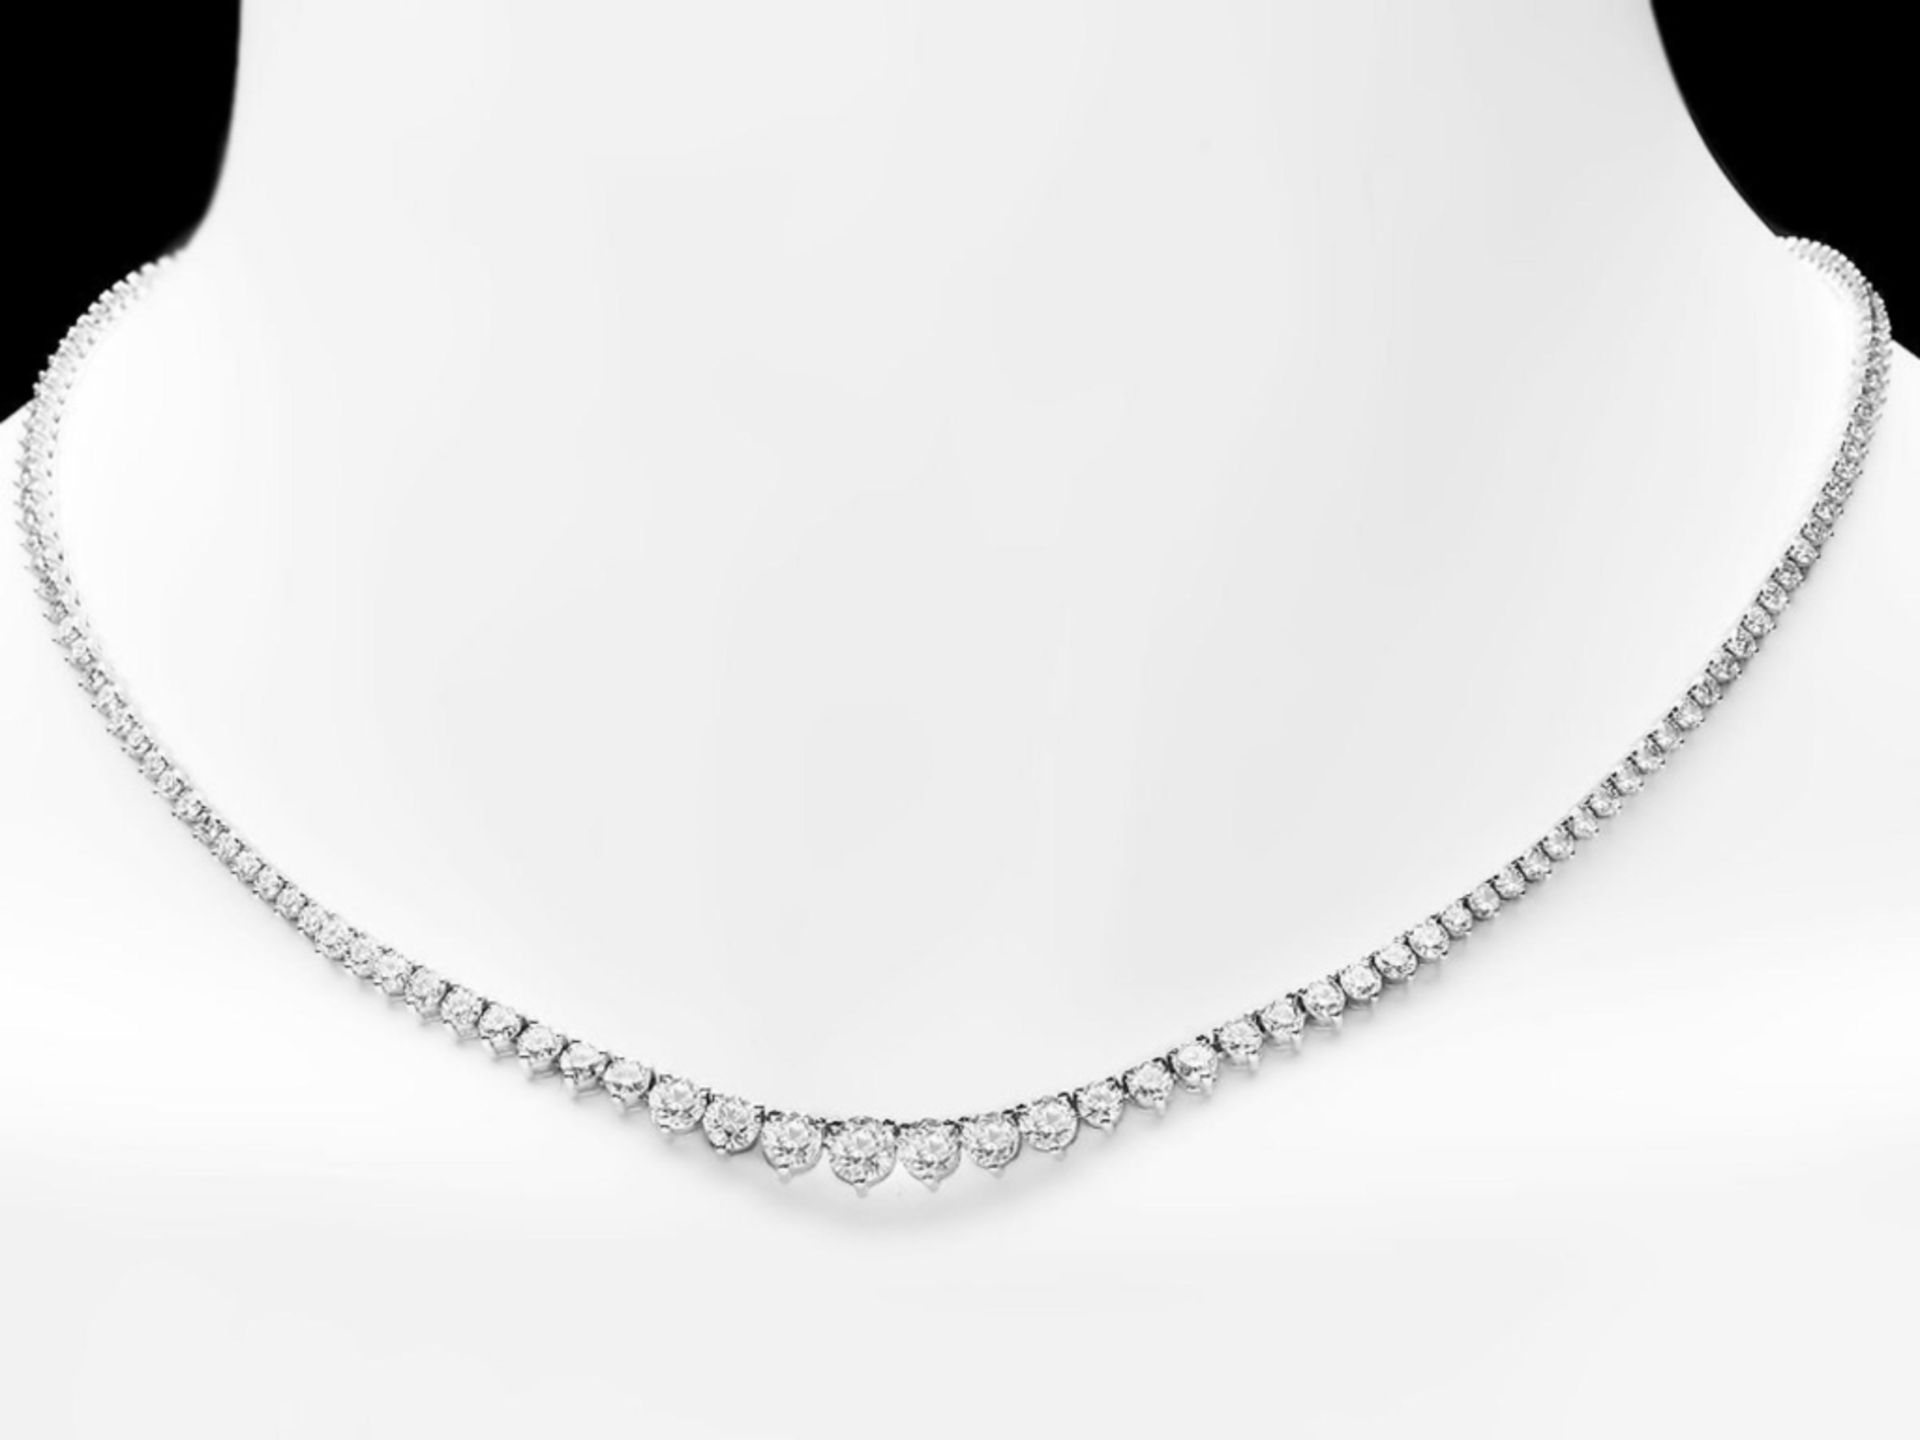 18k White Gold 9.50ct Diamond Necklace - Image 3 of 5